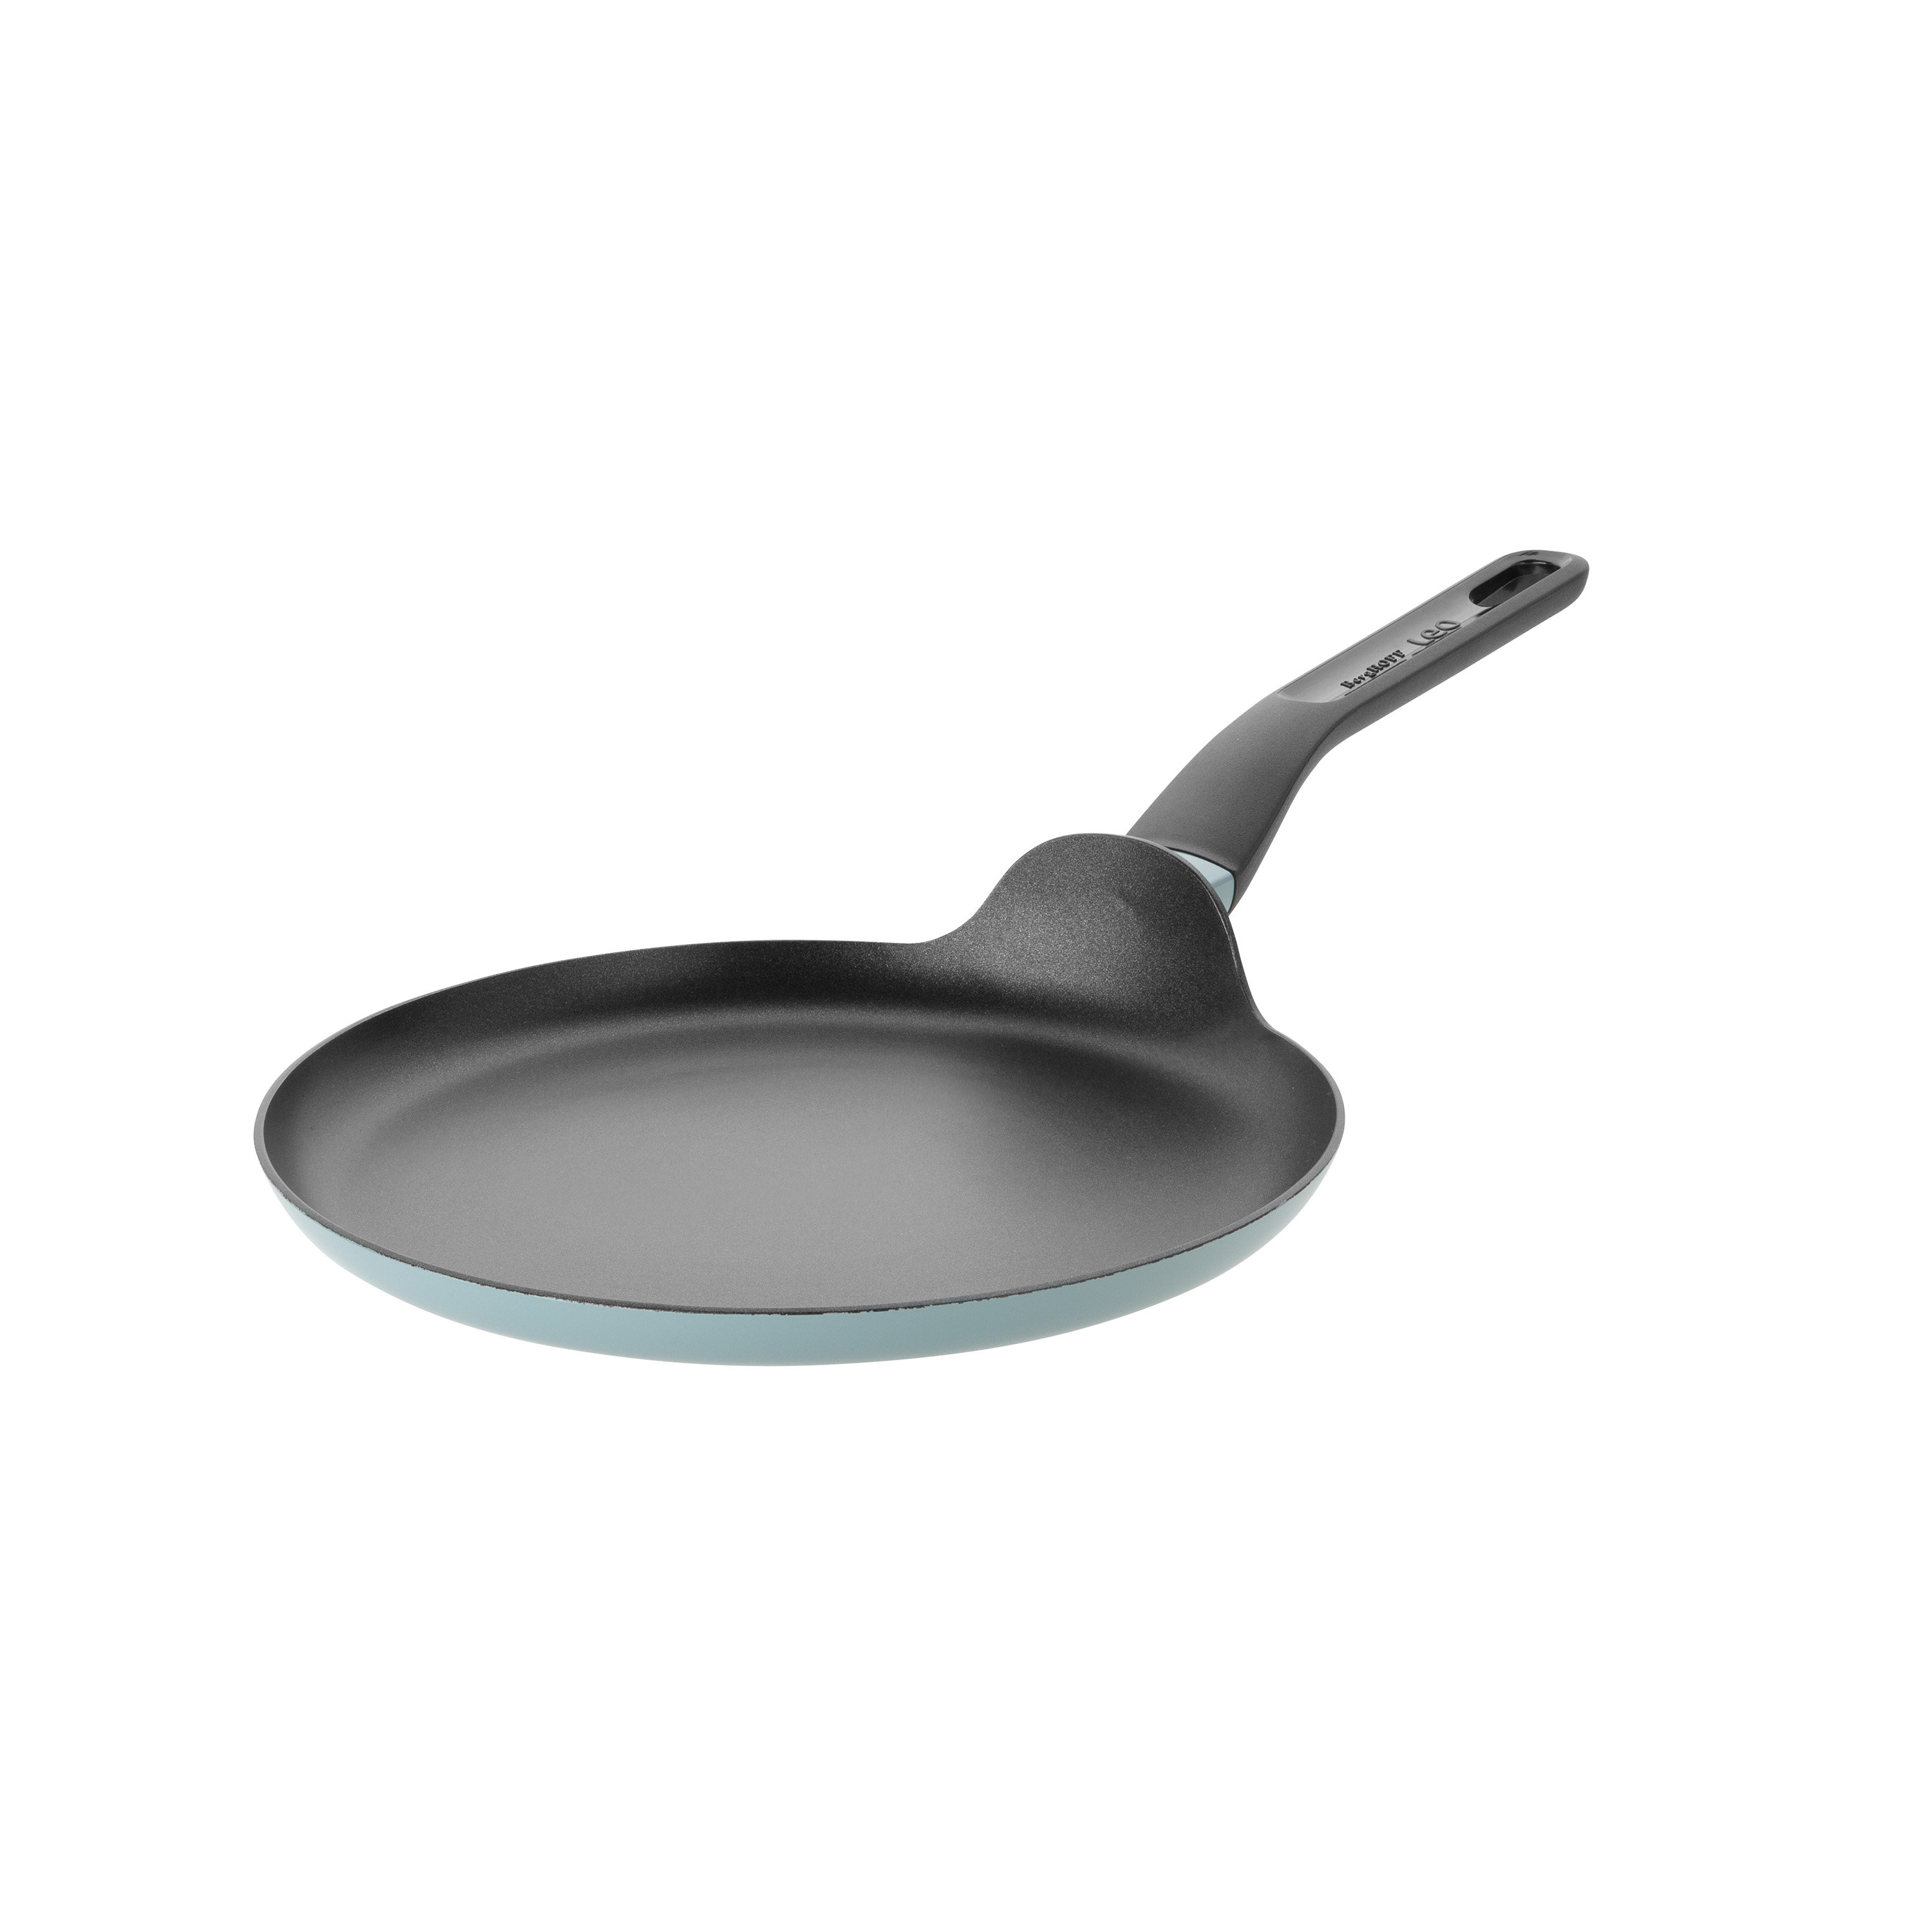 BergHOFF Graphite Non-toxic, Non-stick Ceramic Frying Pan 10